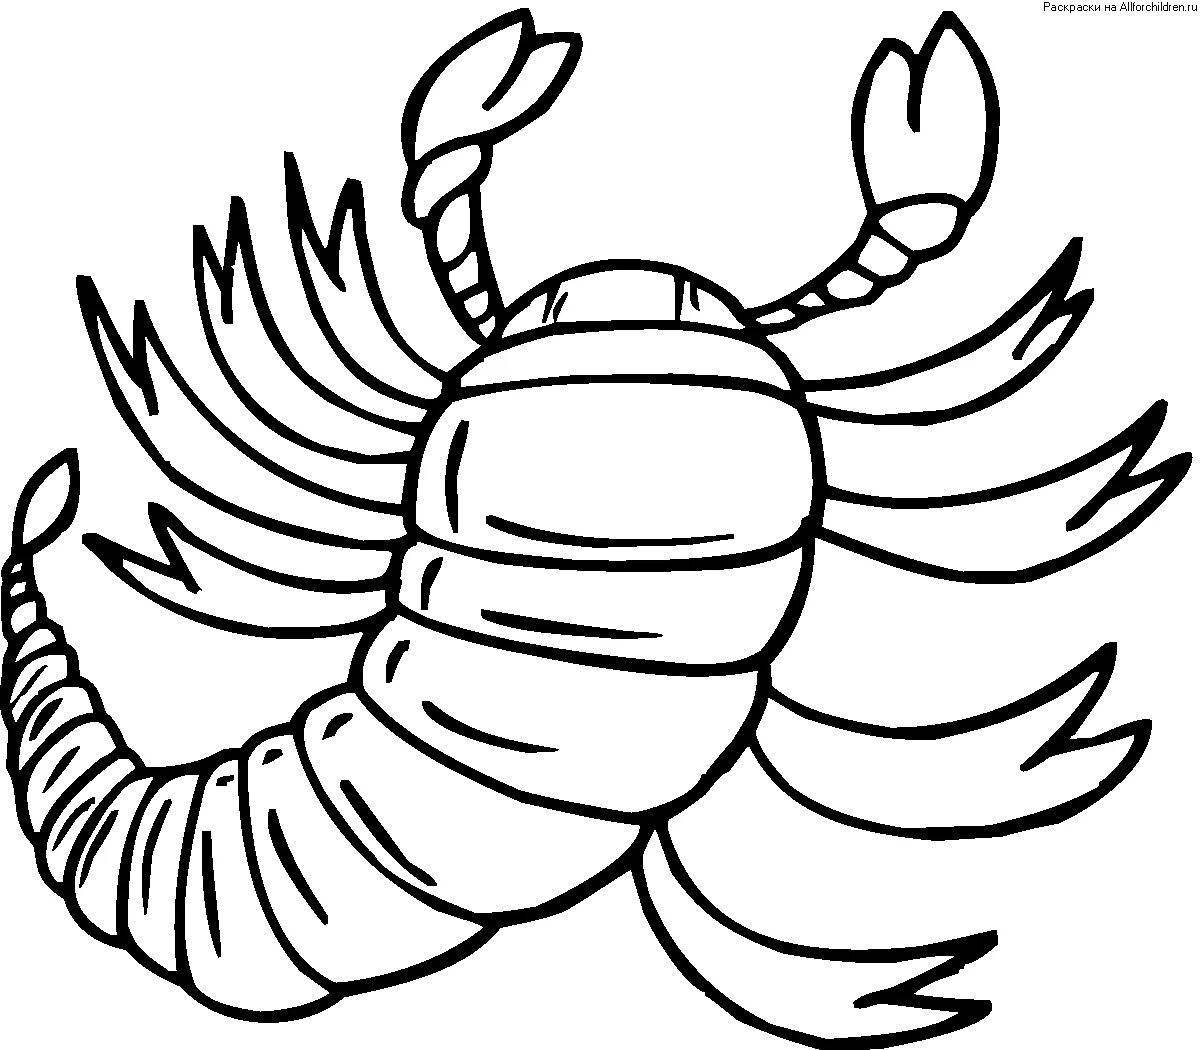 Cute scorpion coloring book for kids